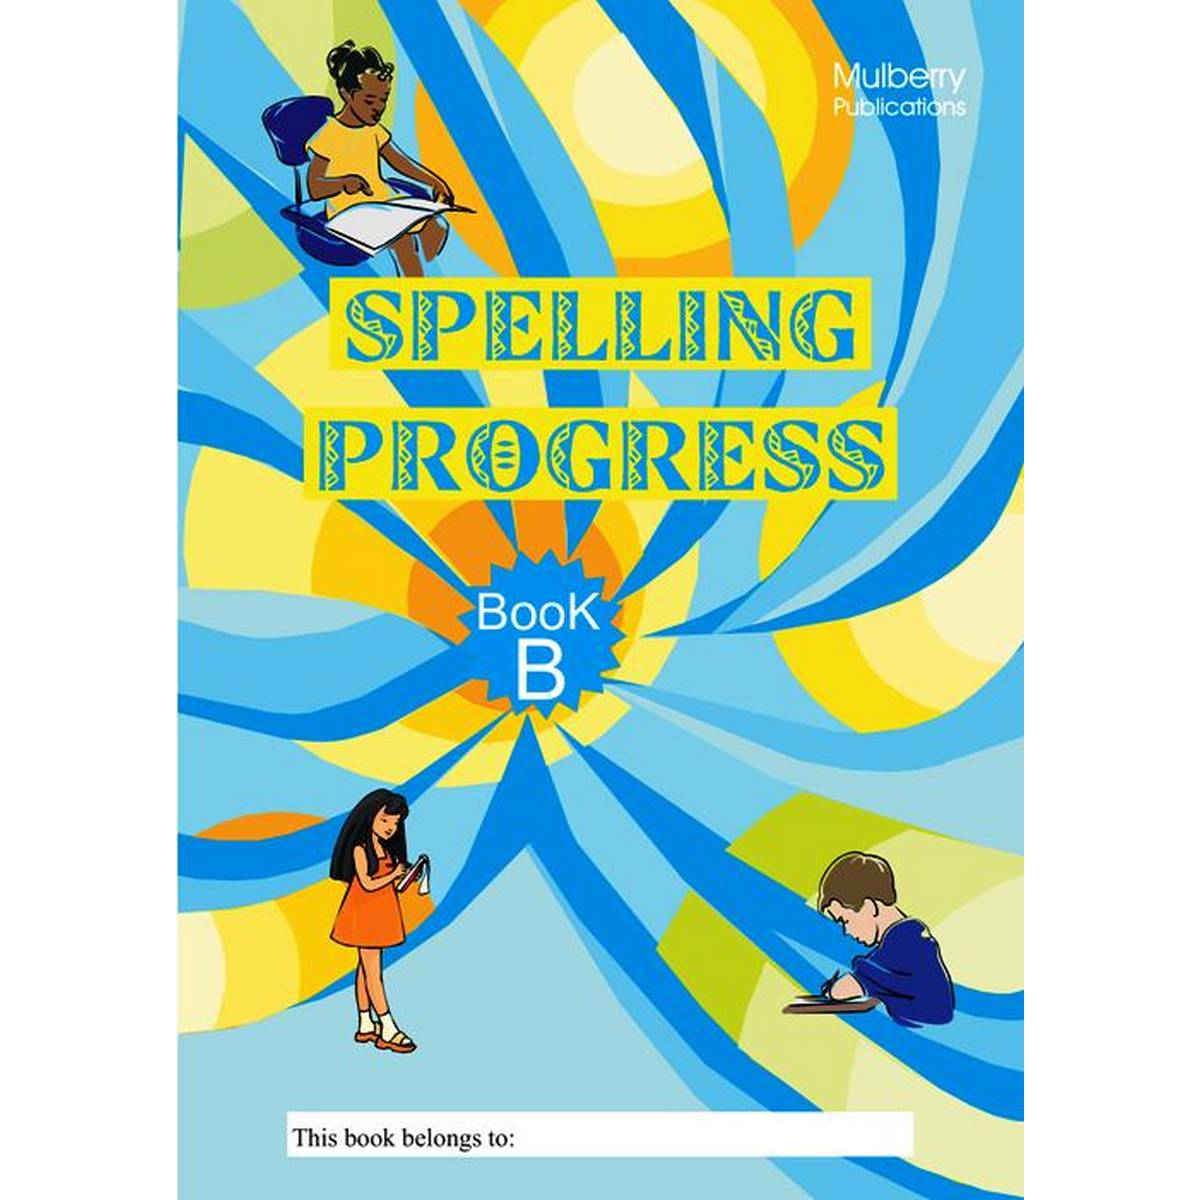 Spelling Progress Book B